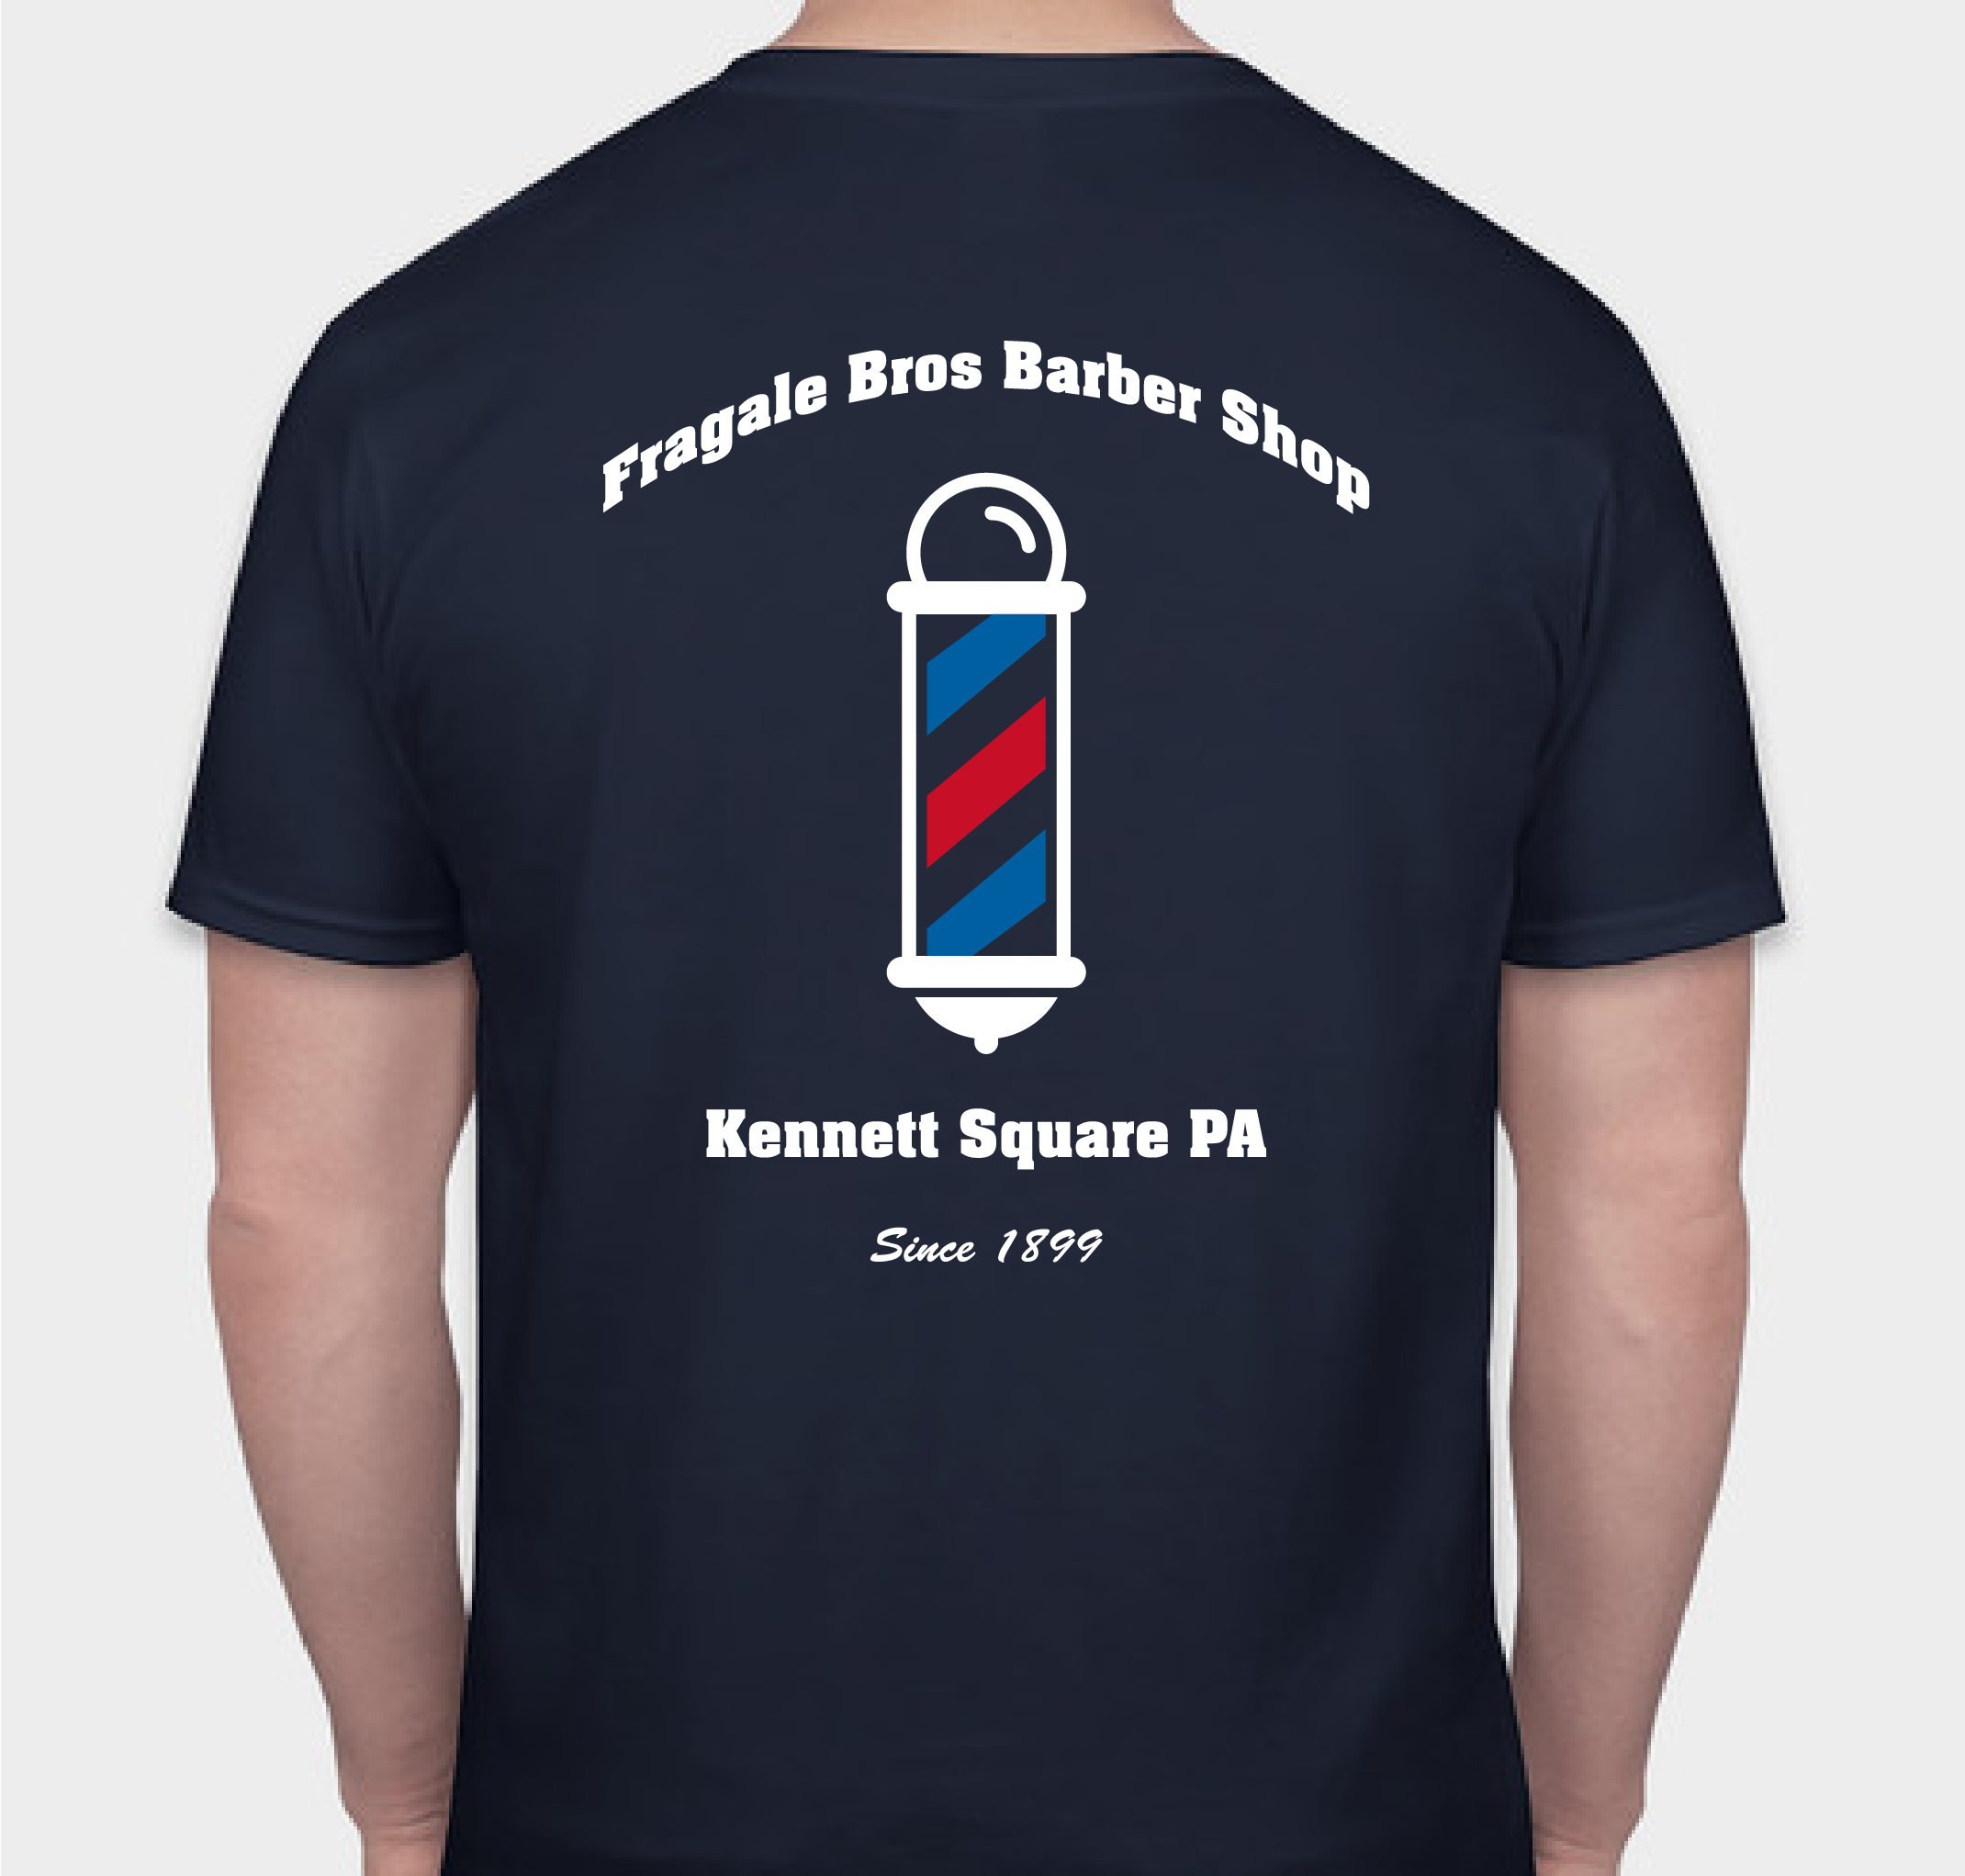 FragaleStrong T Shirt Fundraiser - unisex shirt design - back